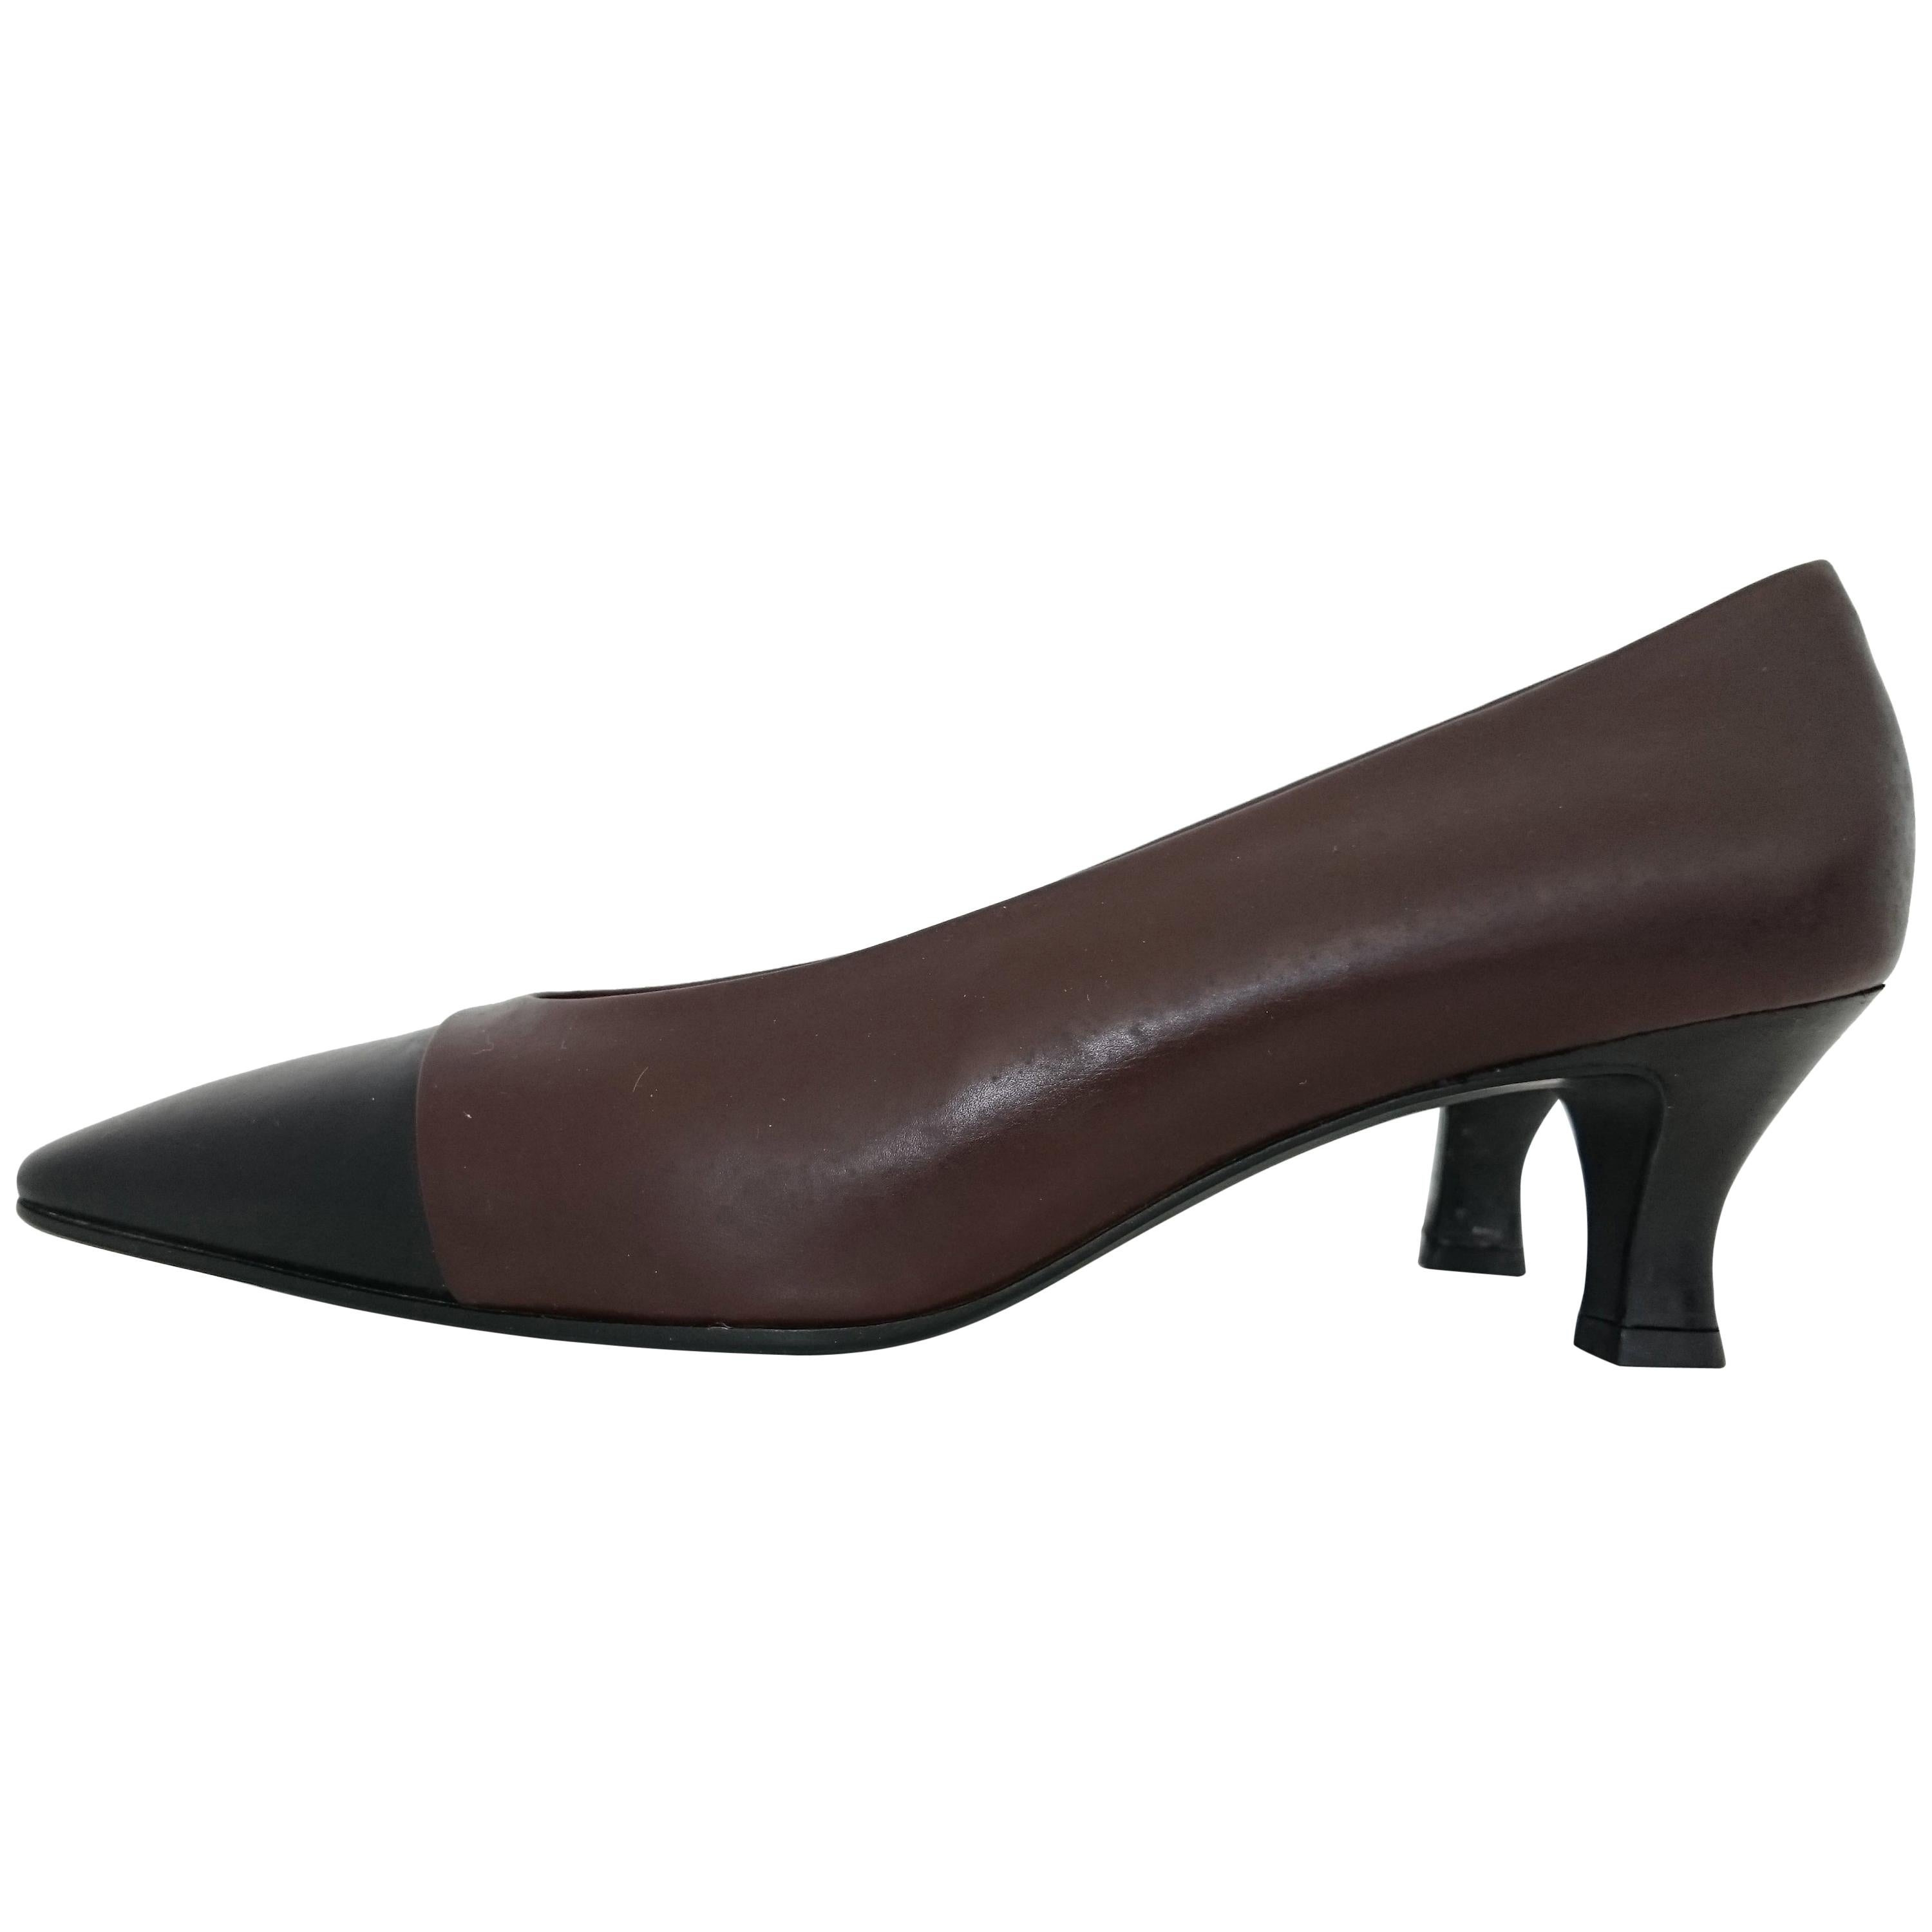 Prada Dark Bicolor Heels in Leather. Size 39 1/2 For Sale